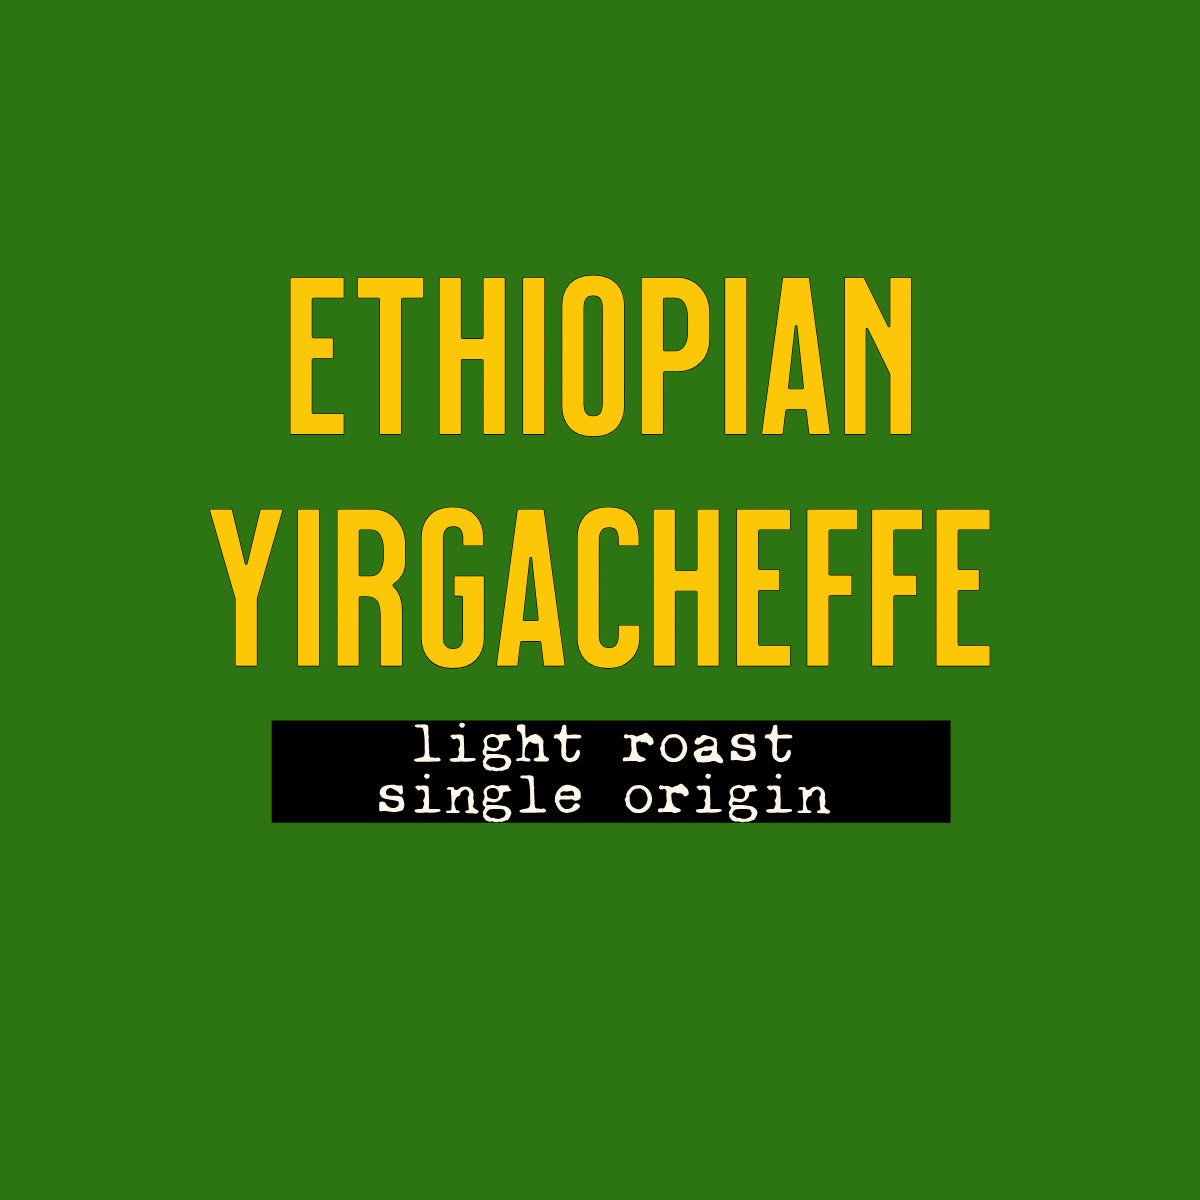 Ethiopian Yirgacheffe - SINGLE ORIGIN